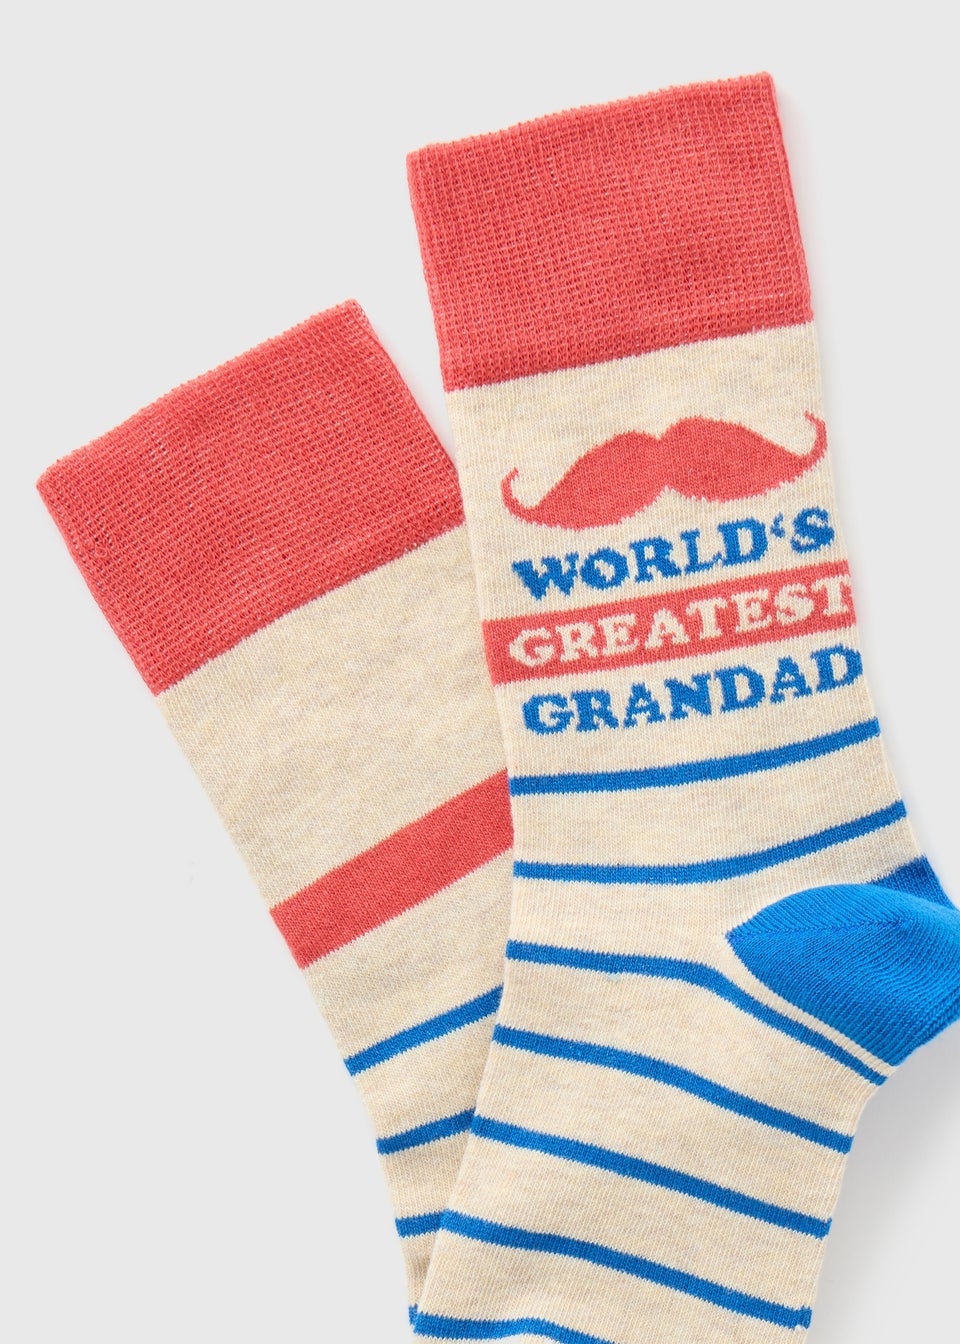 Beige 'Greatest Grandad' socks